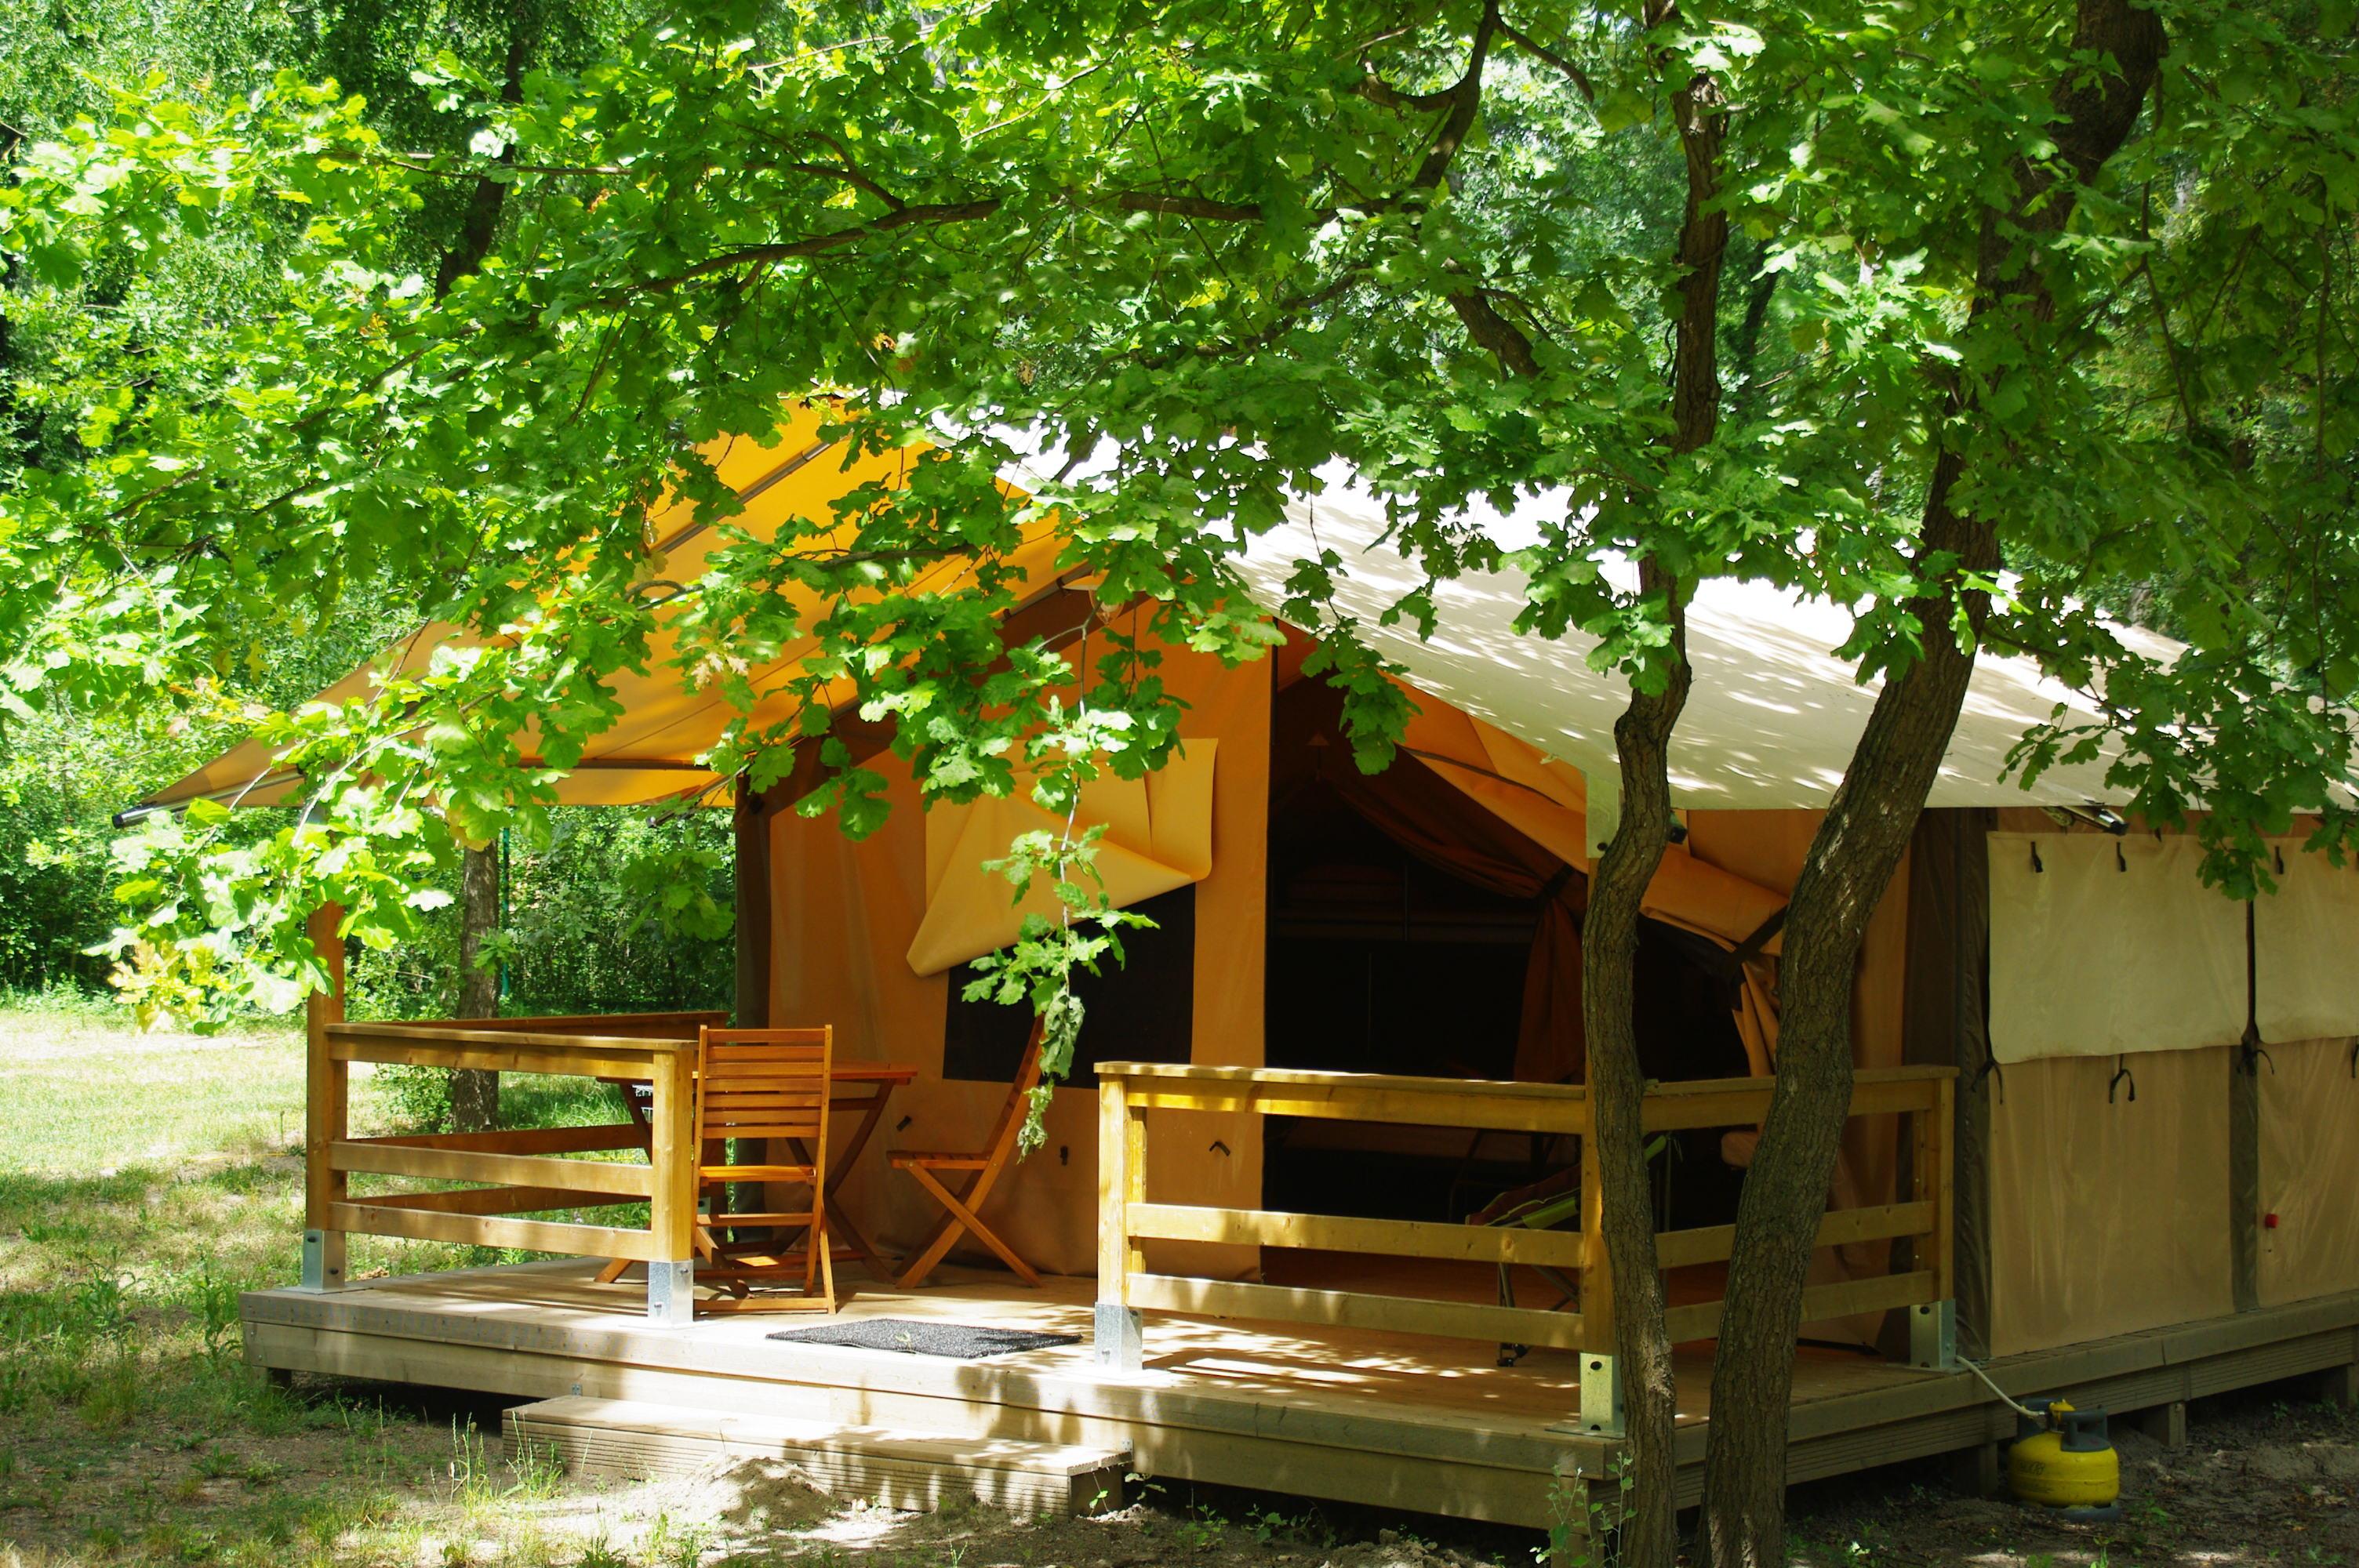 Accommodation - Tente Lodge Victoria - Camping l'Art de Vivre